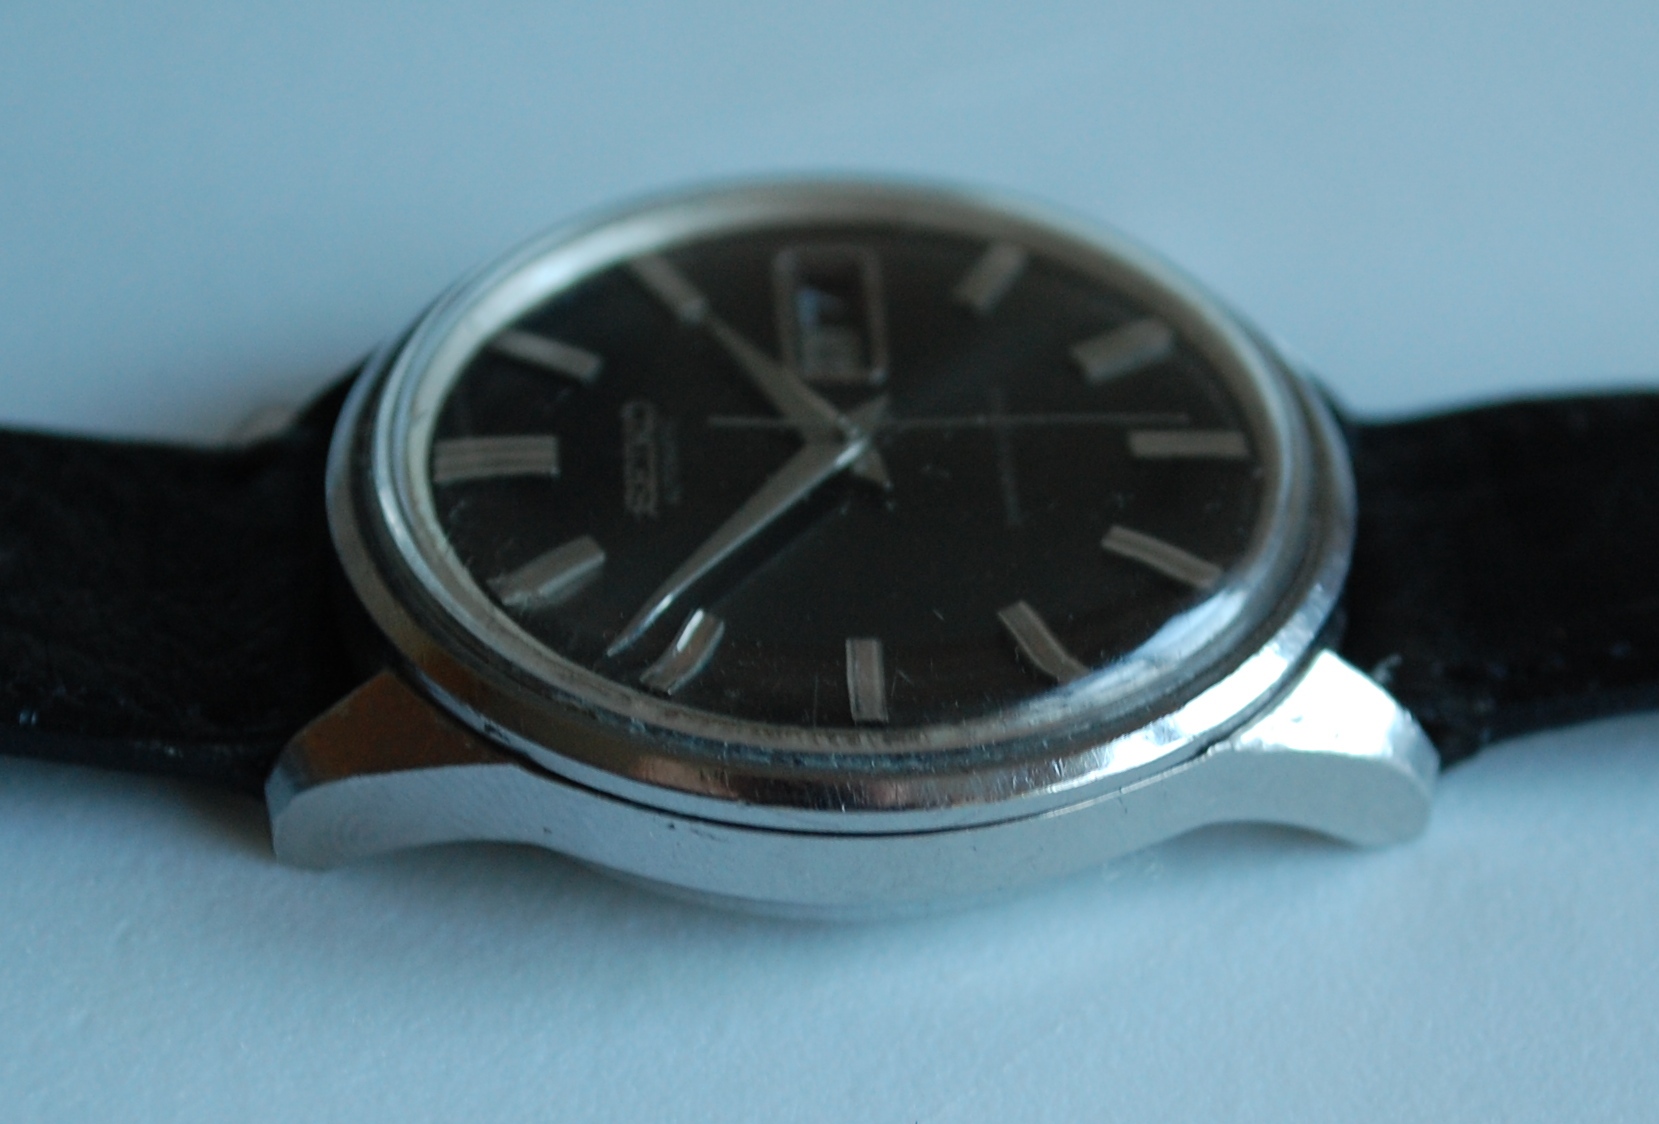 SOLD 1967 Seiko Diashock automatic 6119-9990 - Birth Year Watches